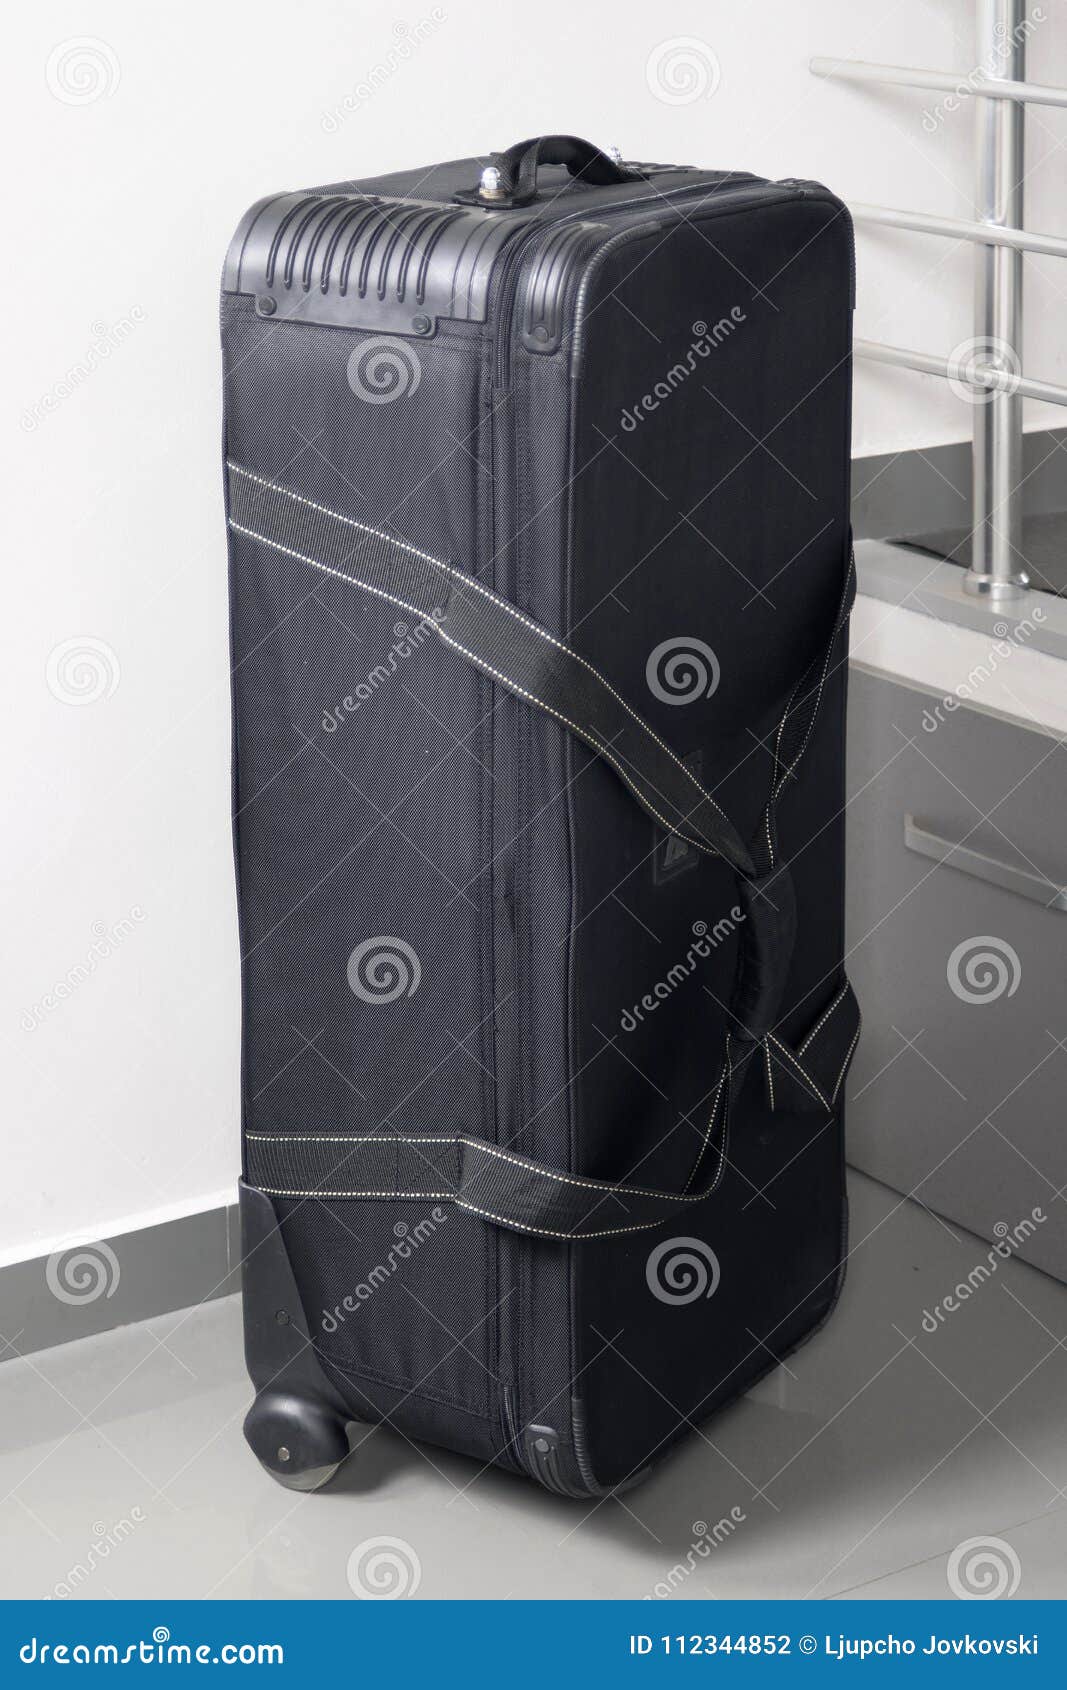 Big Black Travel Bag Clipping Path and Wheels Stock - Image of human, 112344852